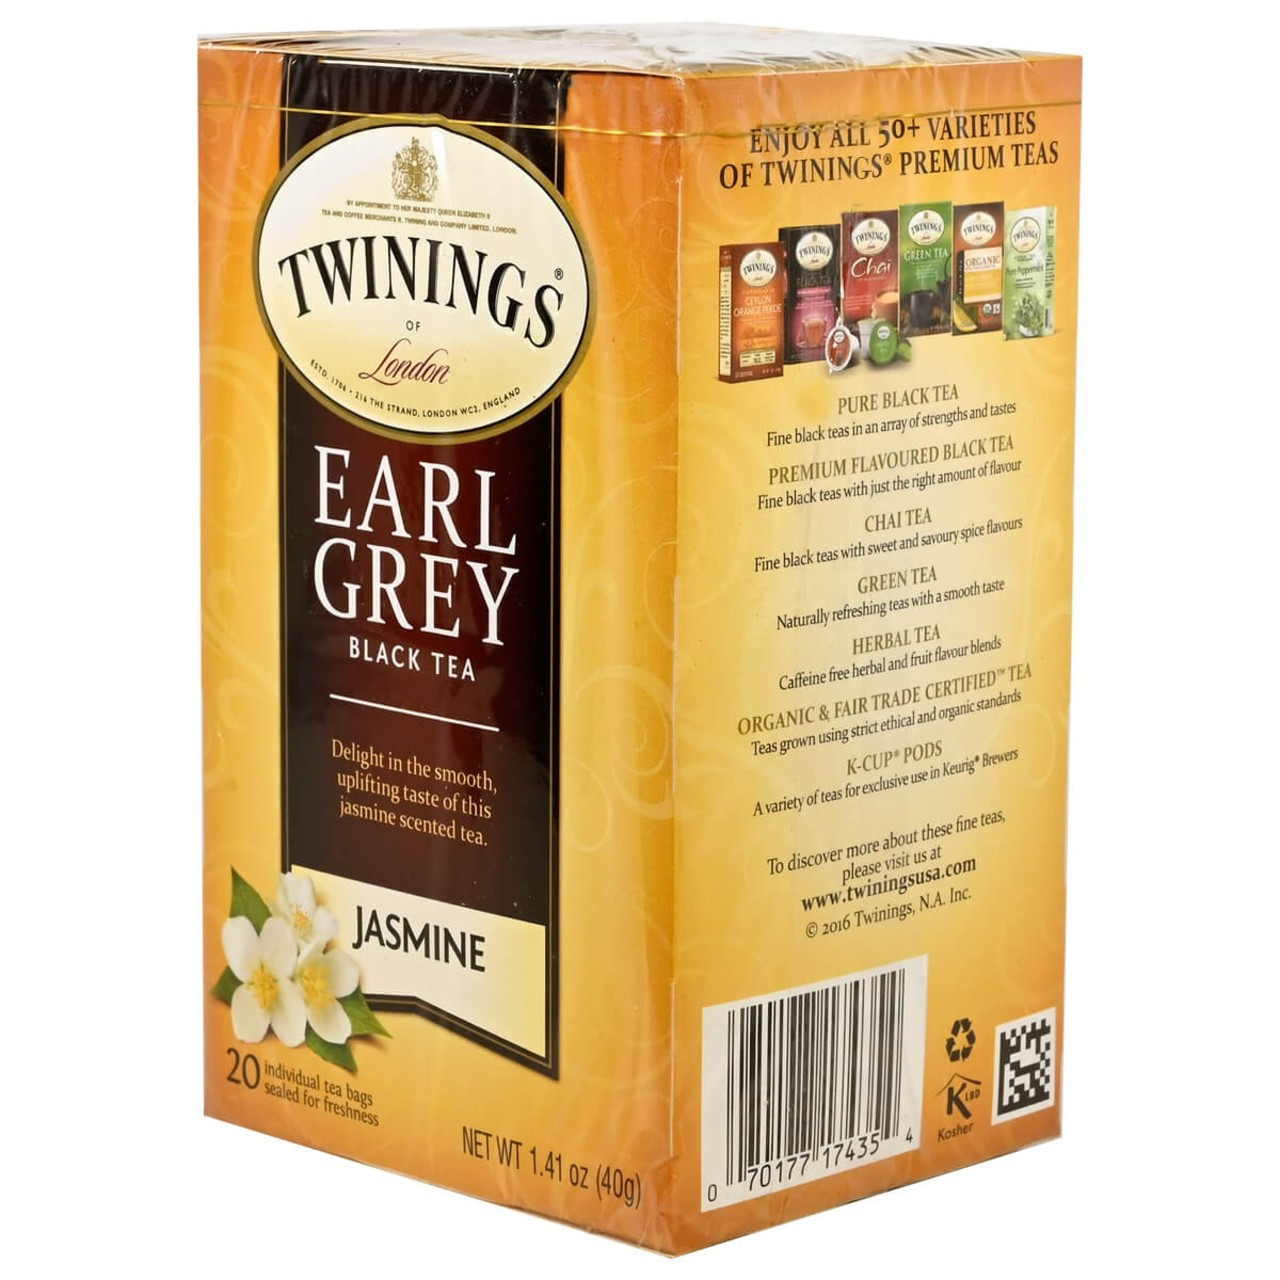 Twinings Black Tea, Earl Grey, Jasmine, Tea Bags - 20 tea bags, 1.41 oz